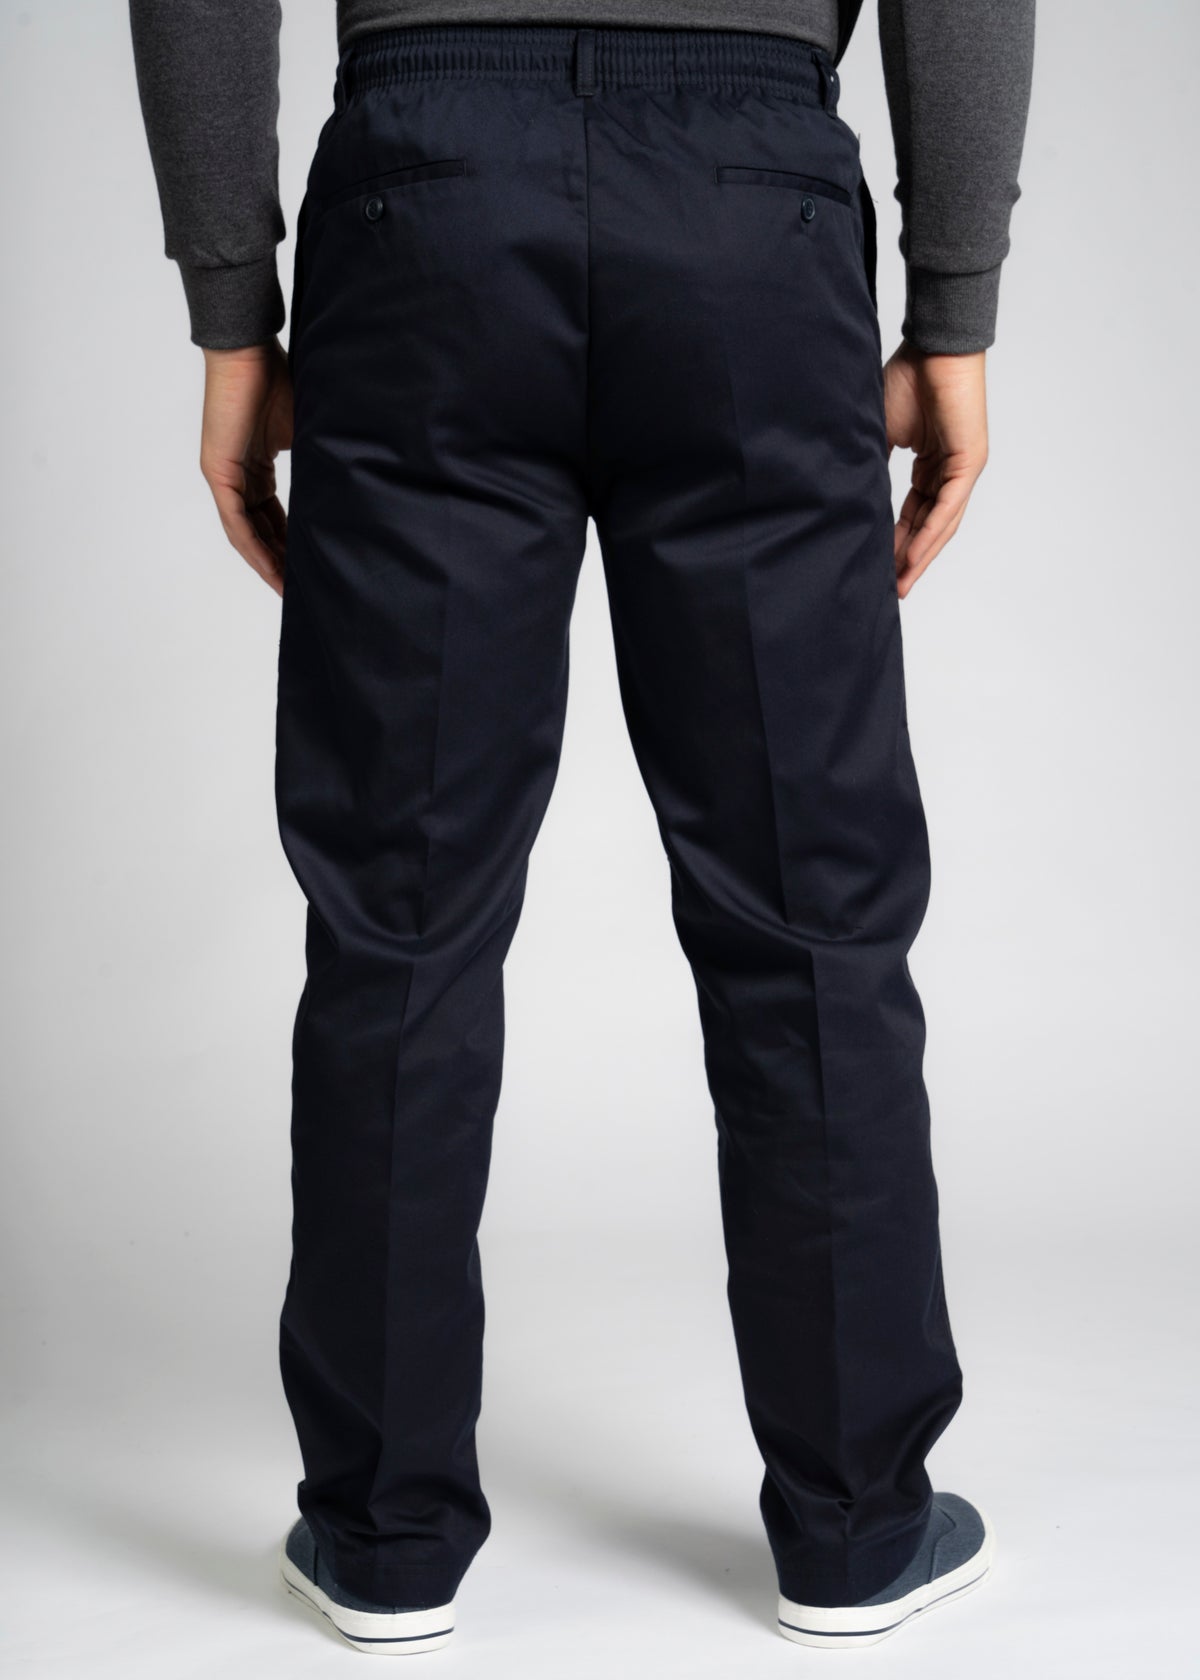 UPower Light HiVis Combat Cargo Work Trousers Elasticated Waist  Workwear  Nation Ltd